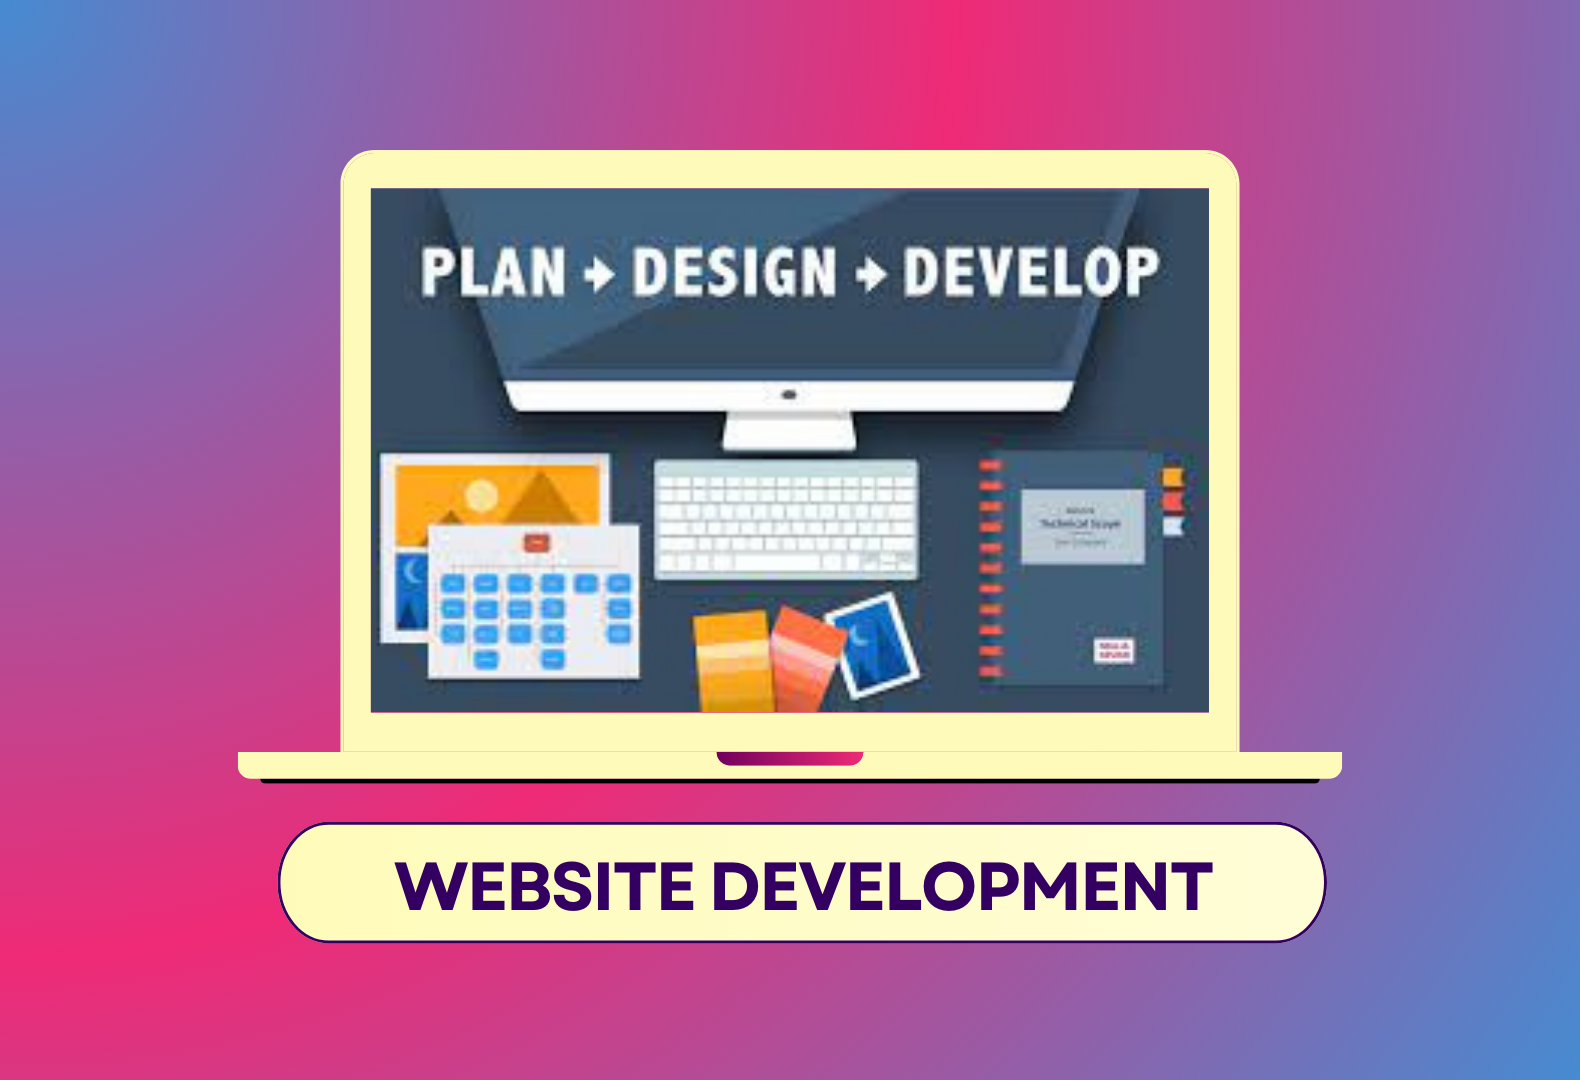 Website Development services